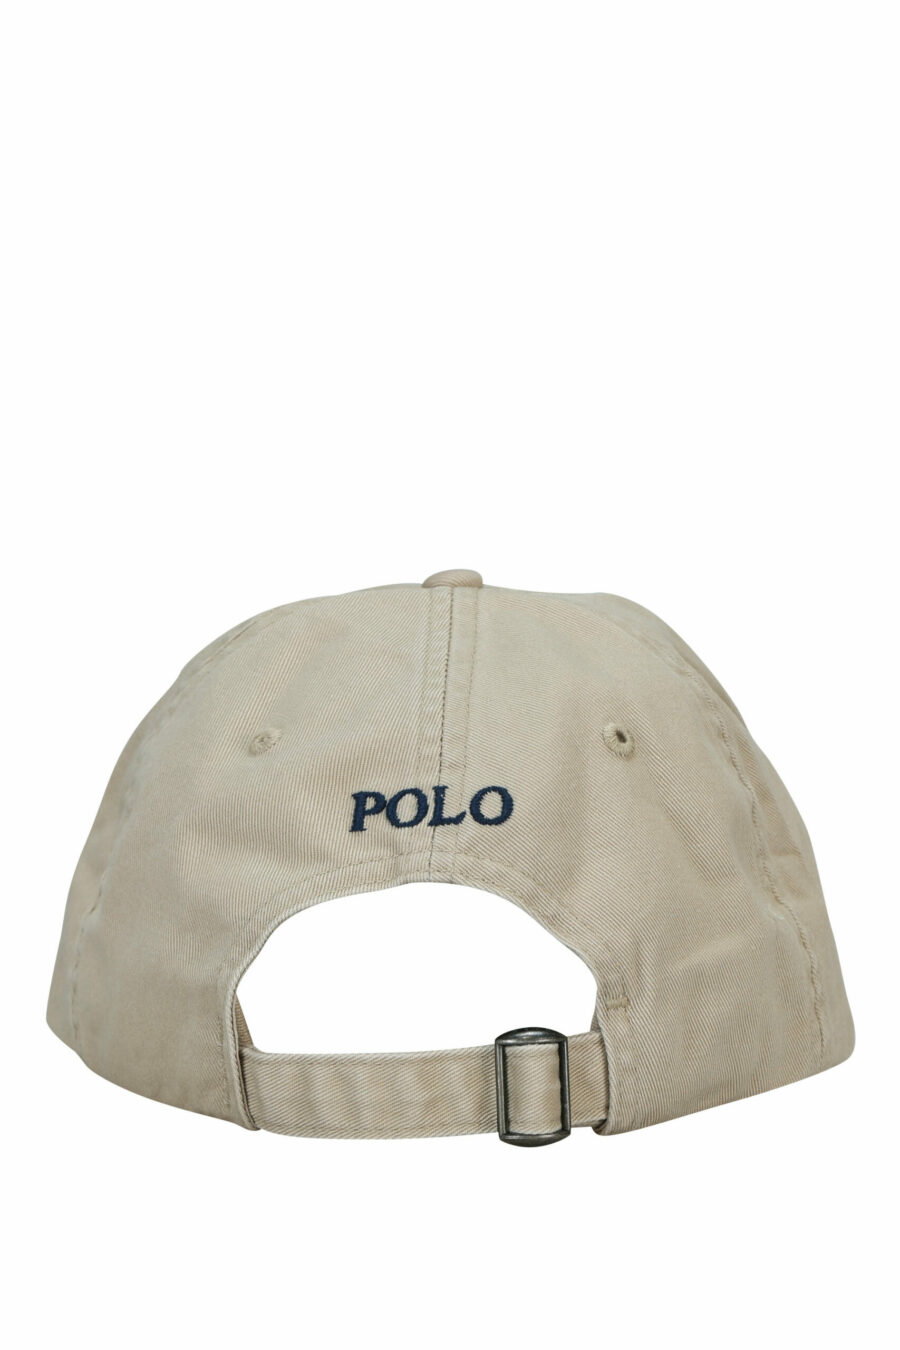 Beige cap with mini-logo "polo" - 3611581319114 1 scaled